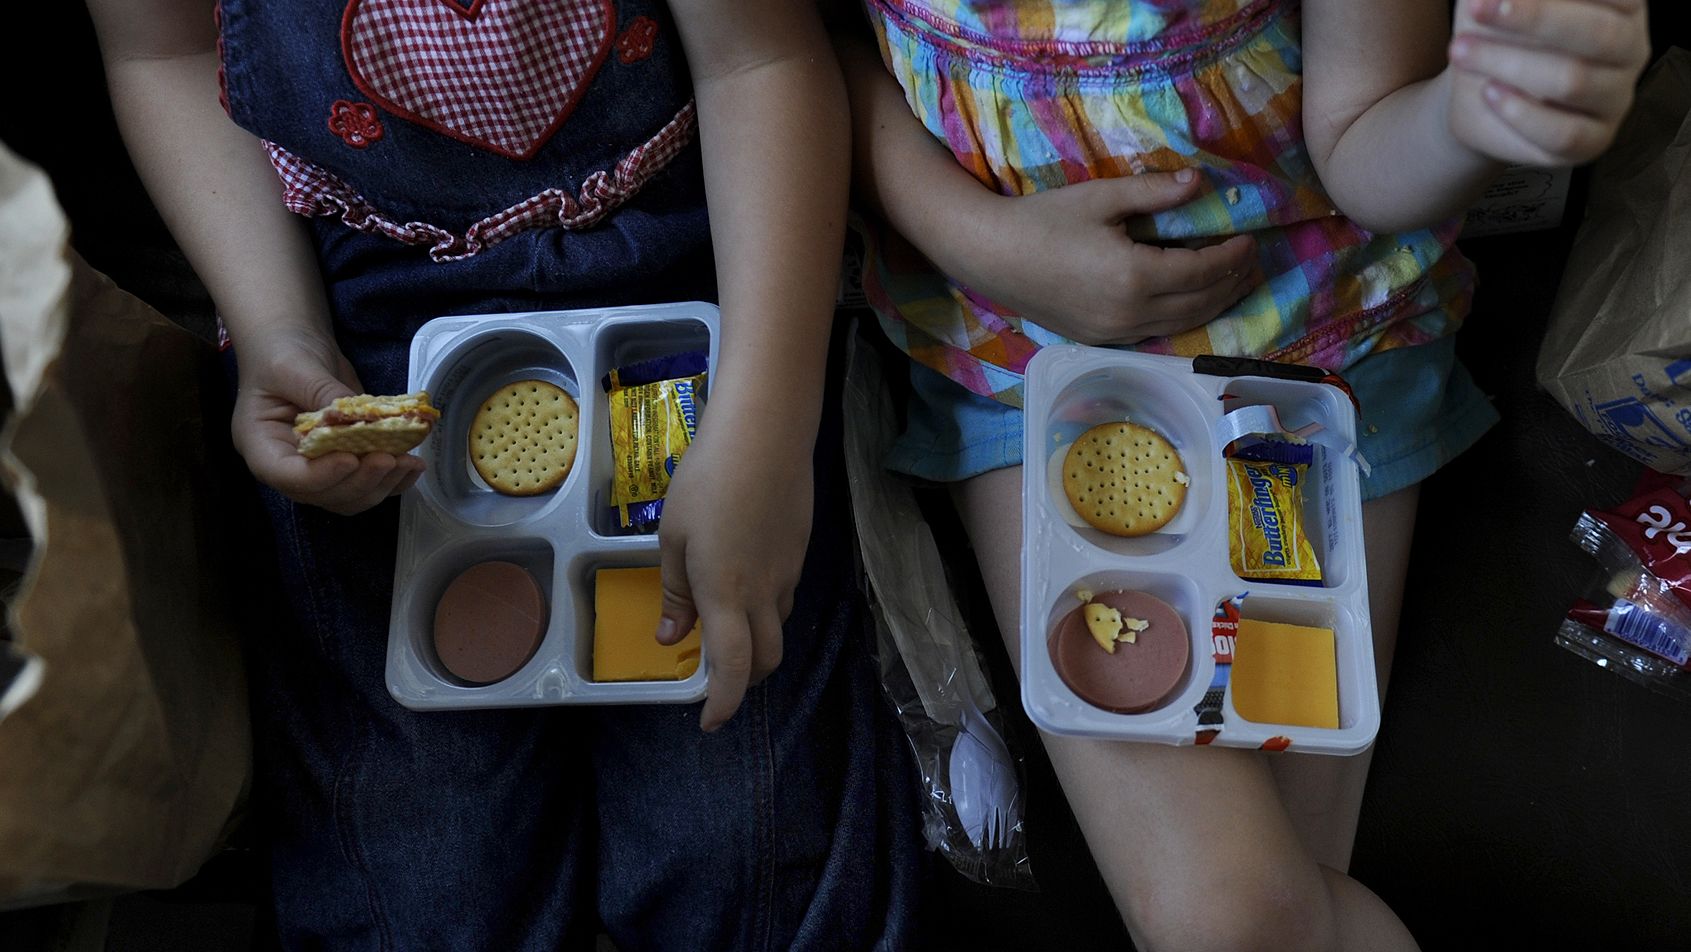 https://media.cnn.com/api/v1/images/stellar/prod/230309113811-lunchables-children-snacks-file-restricted.jpg?c=original